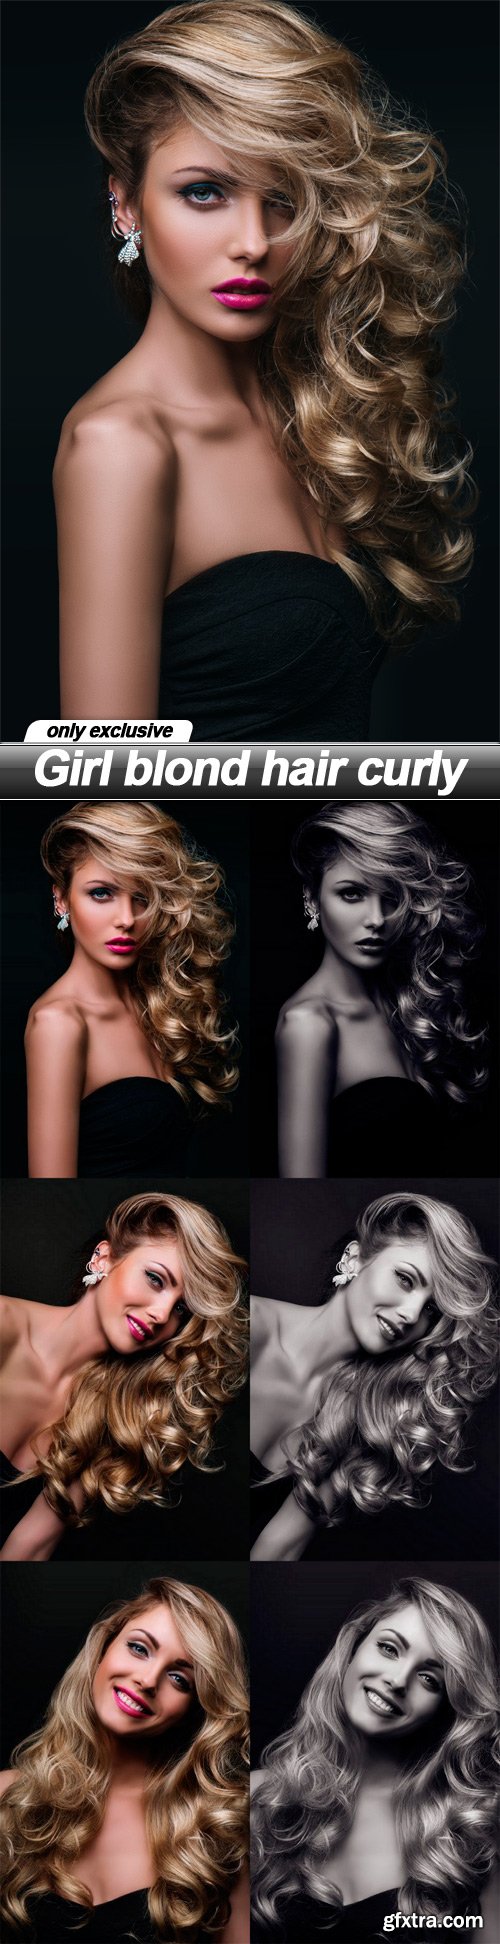 Girl blond hair curly - 6 UHQ JPEG